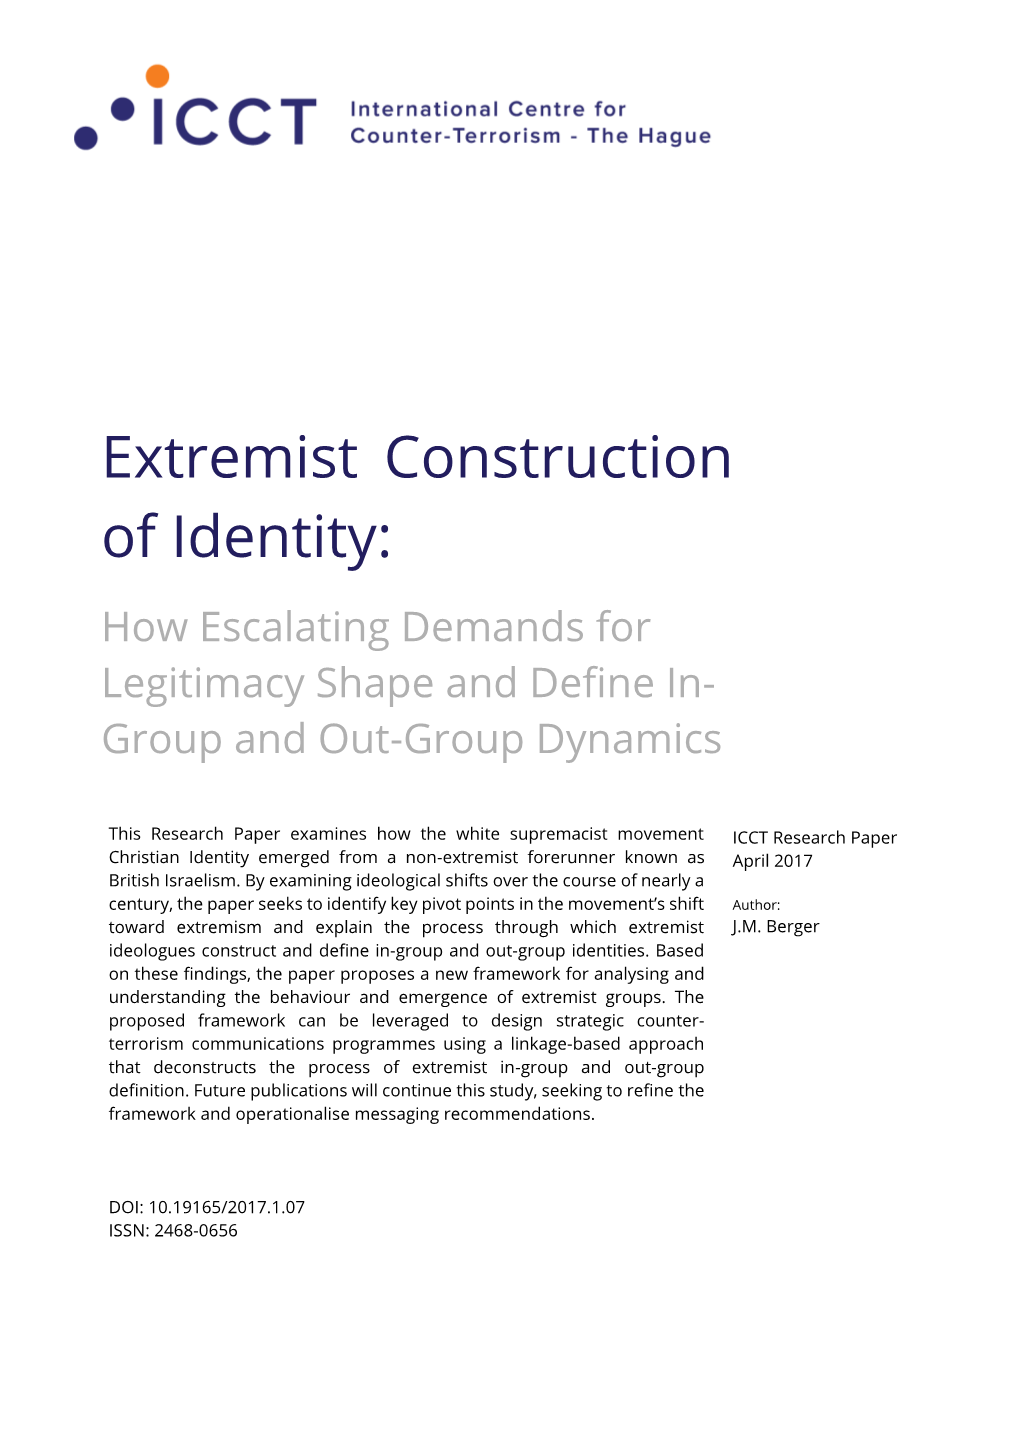 Extremist Construction of Identity